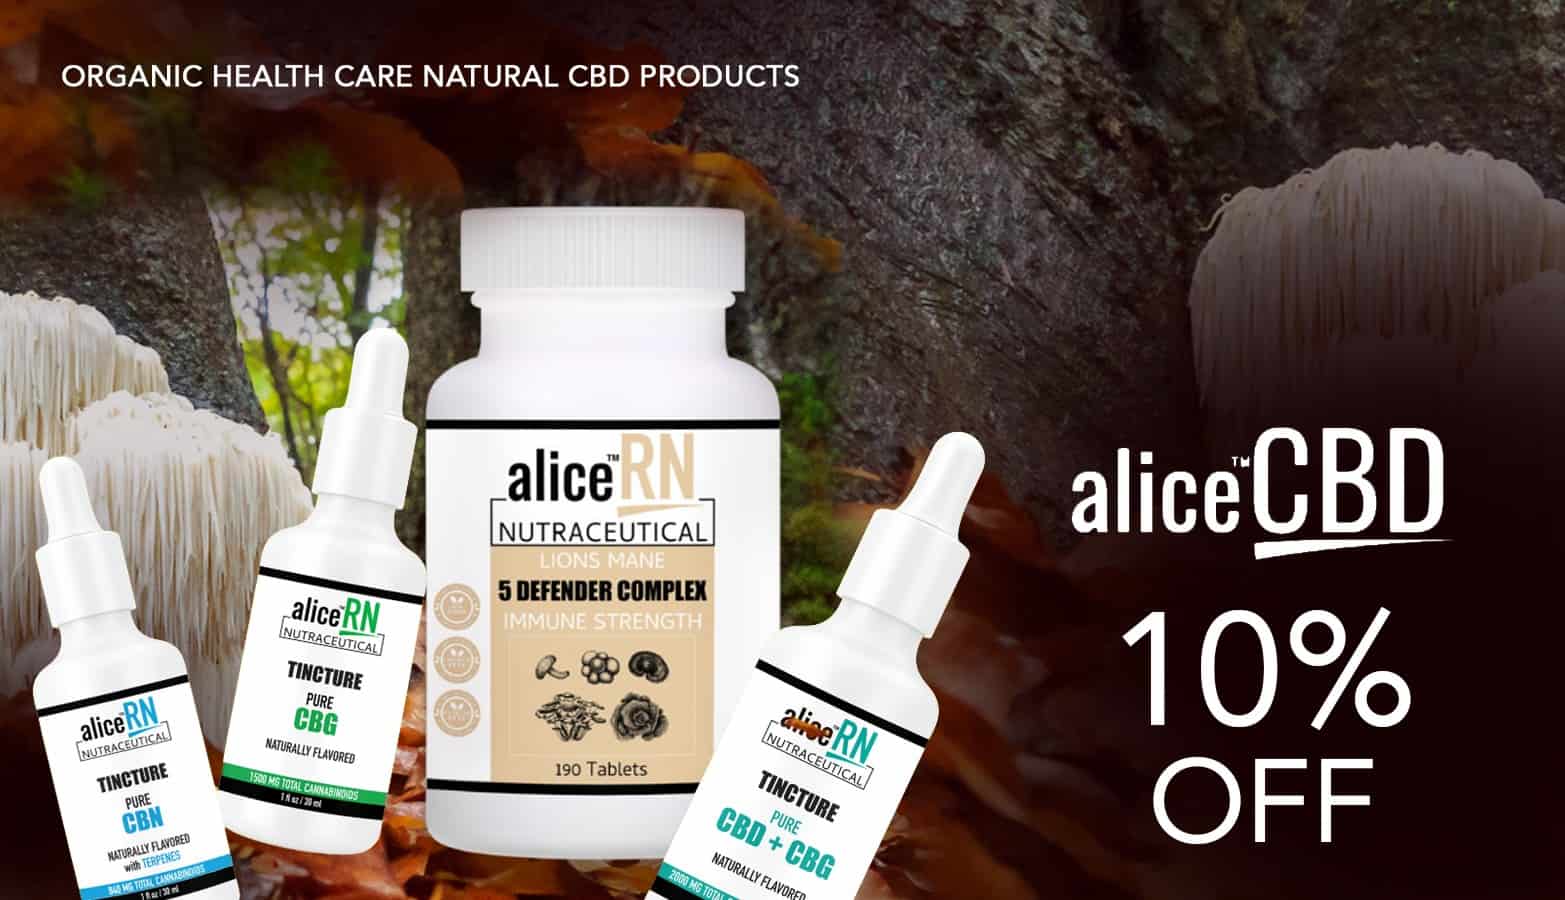 aliceCBD discounts product line